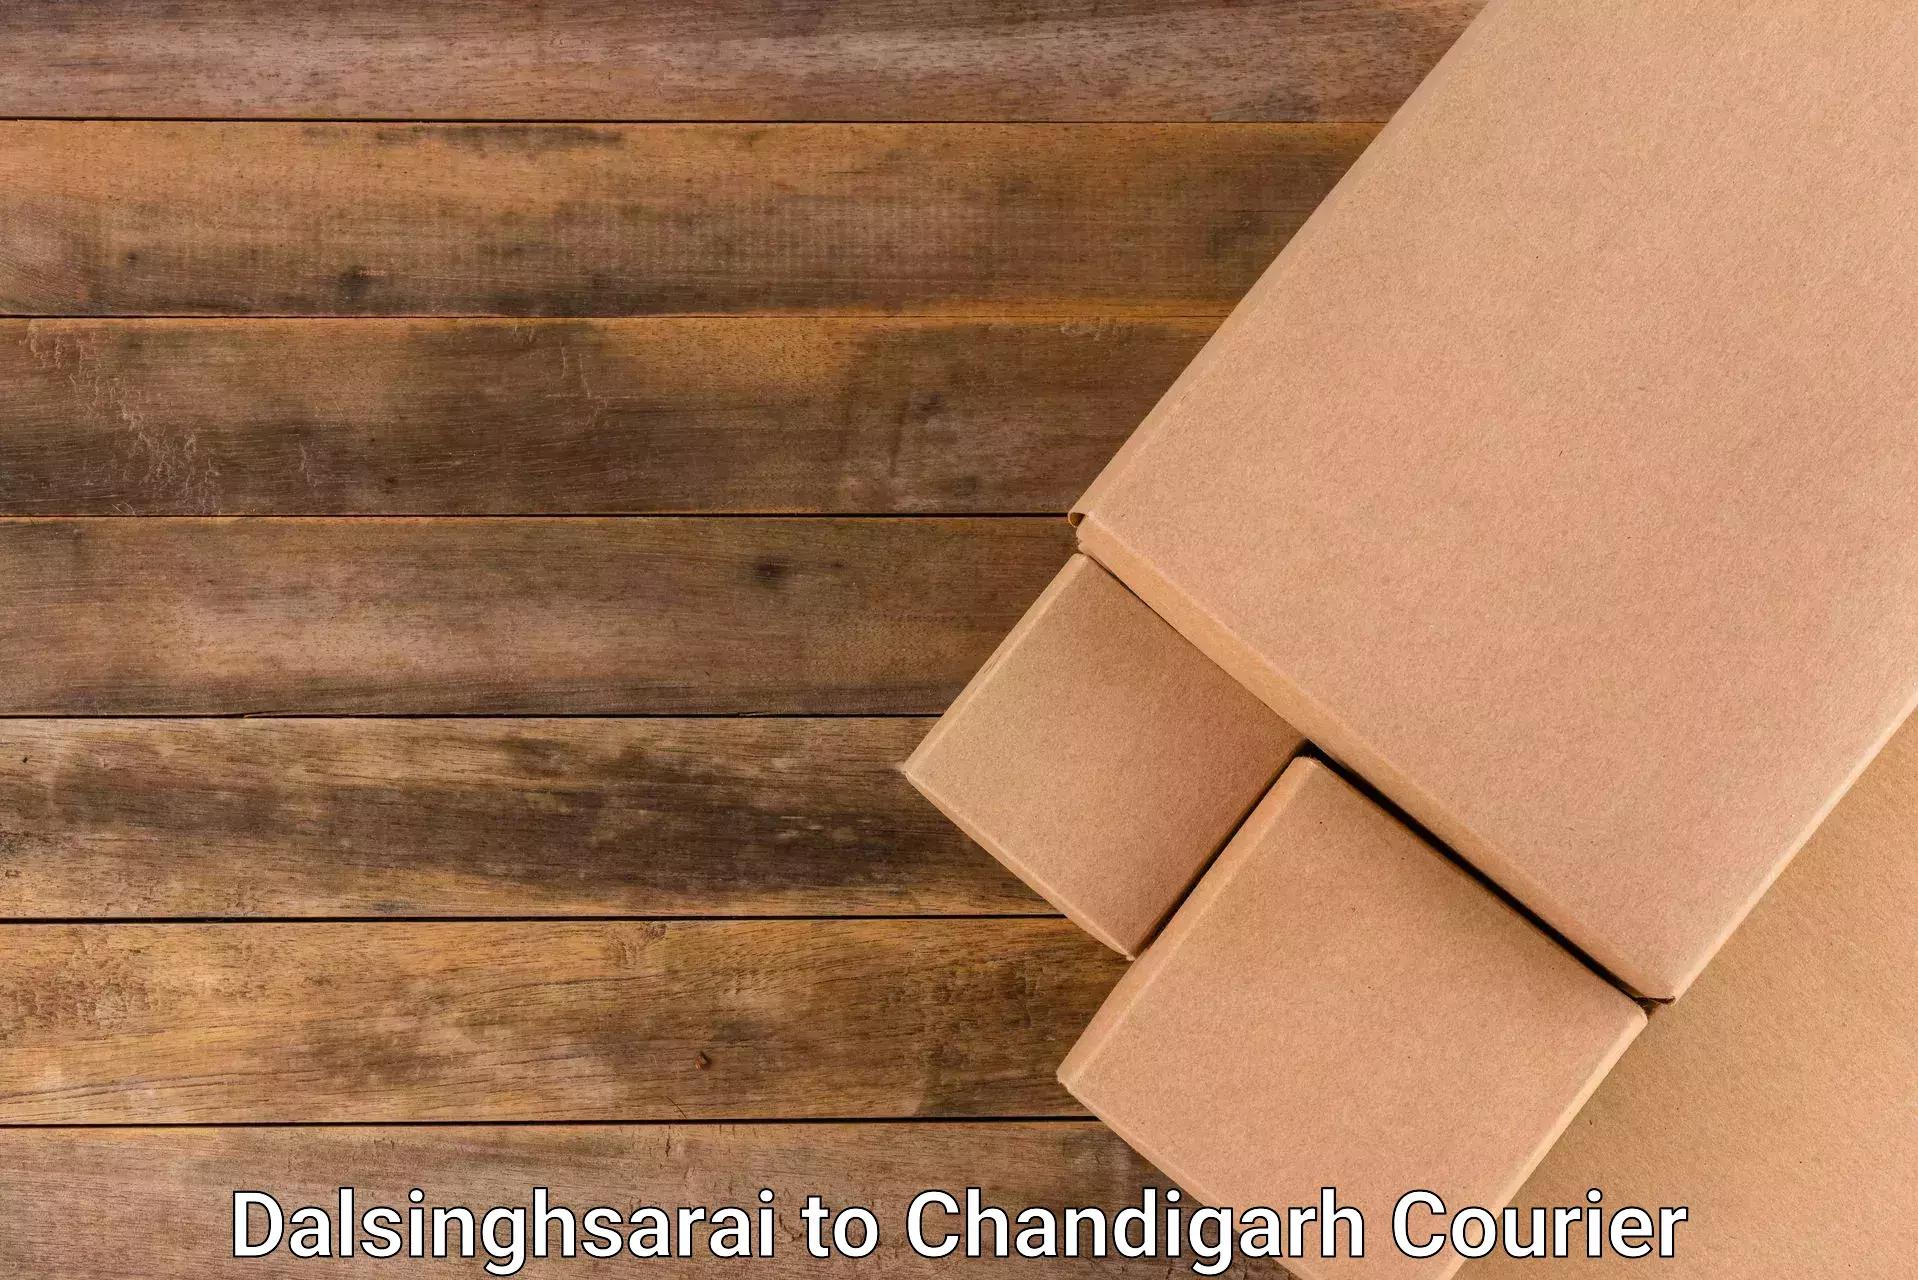 Ground shipping Dalsinghsarai to Chandigarh